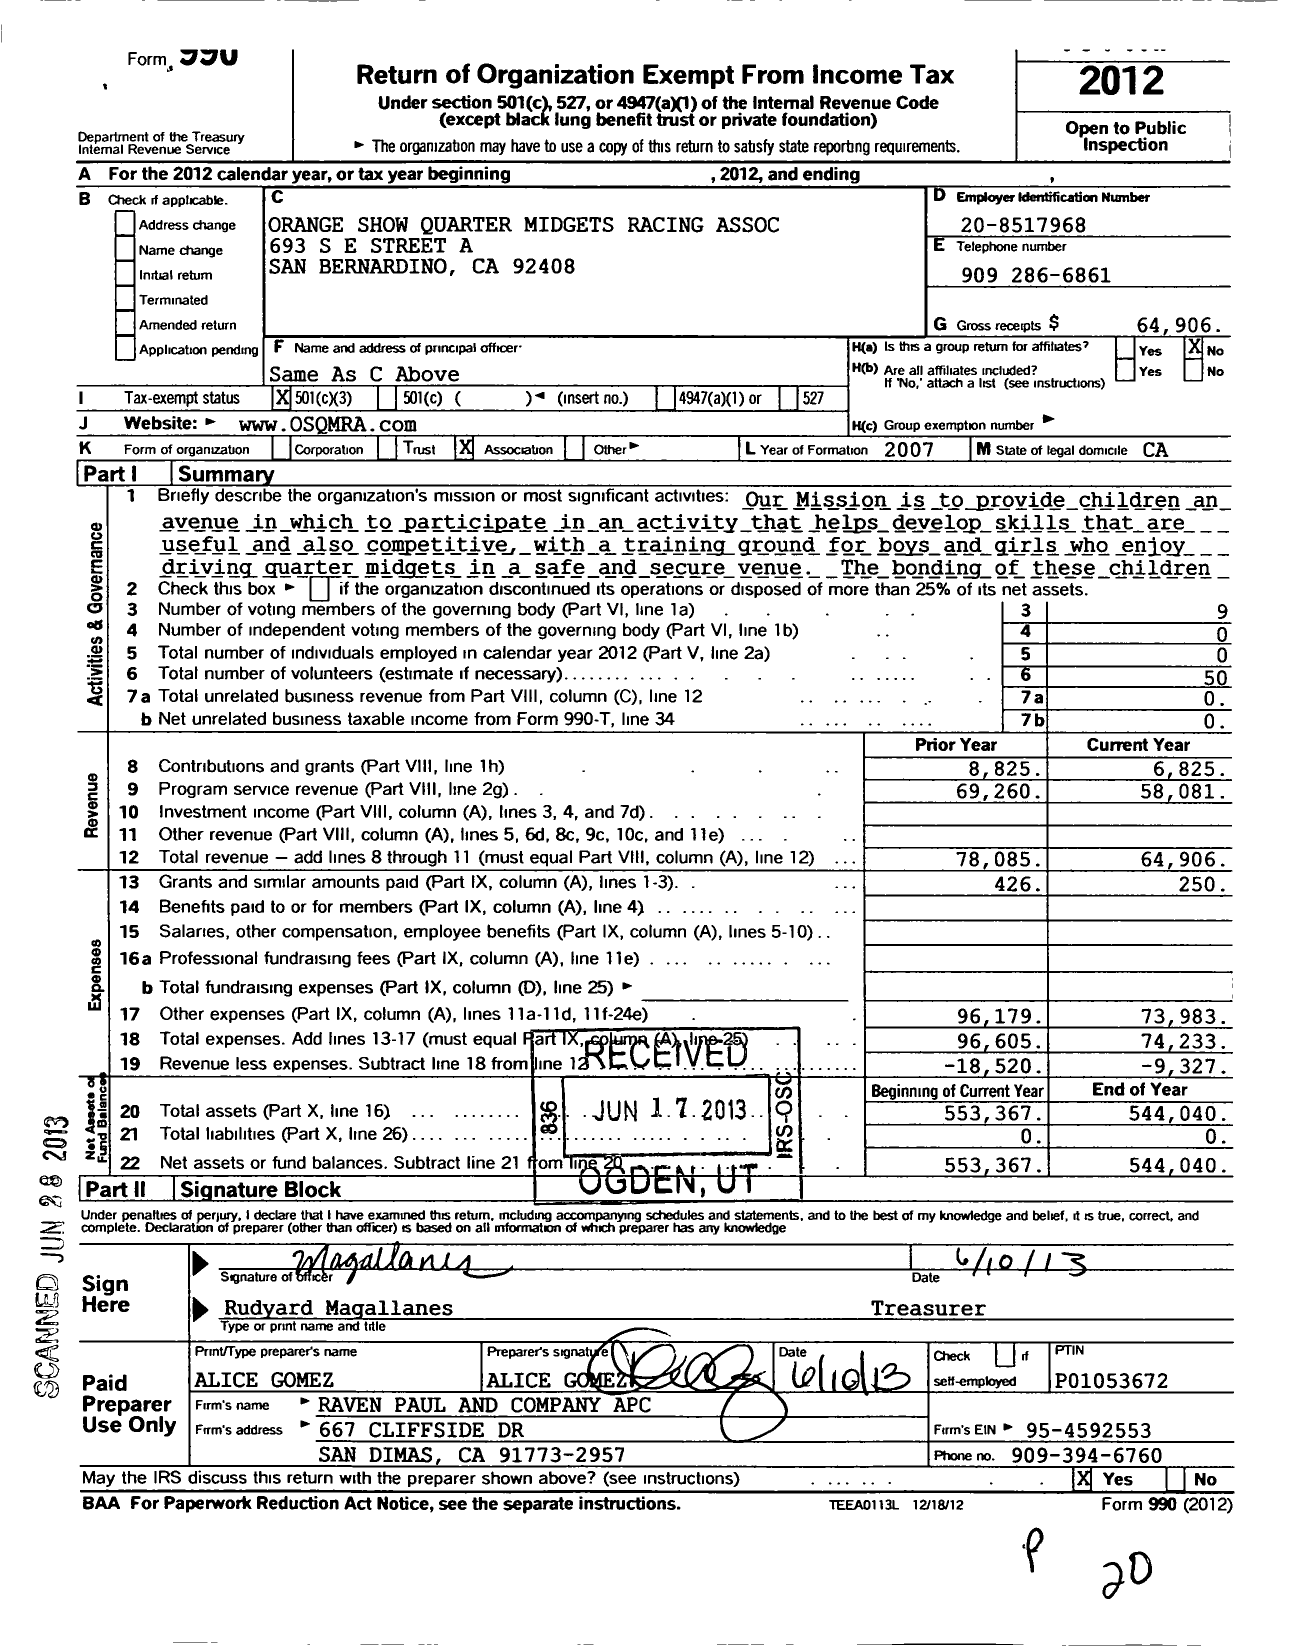 Image of first page of 2012 Form 990 for Orange Show Quarter Midgets Racing Association